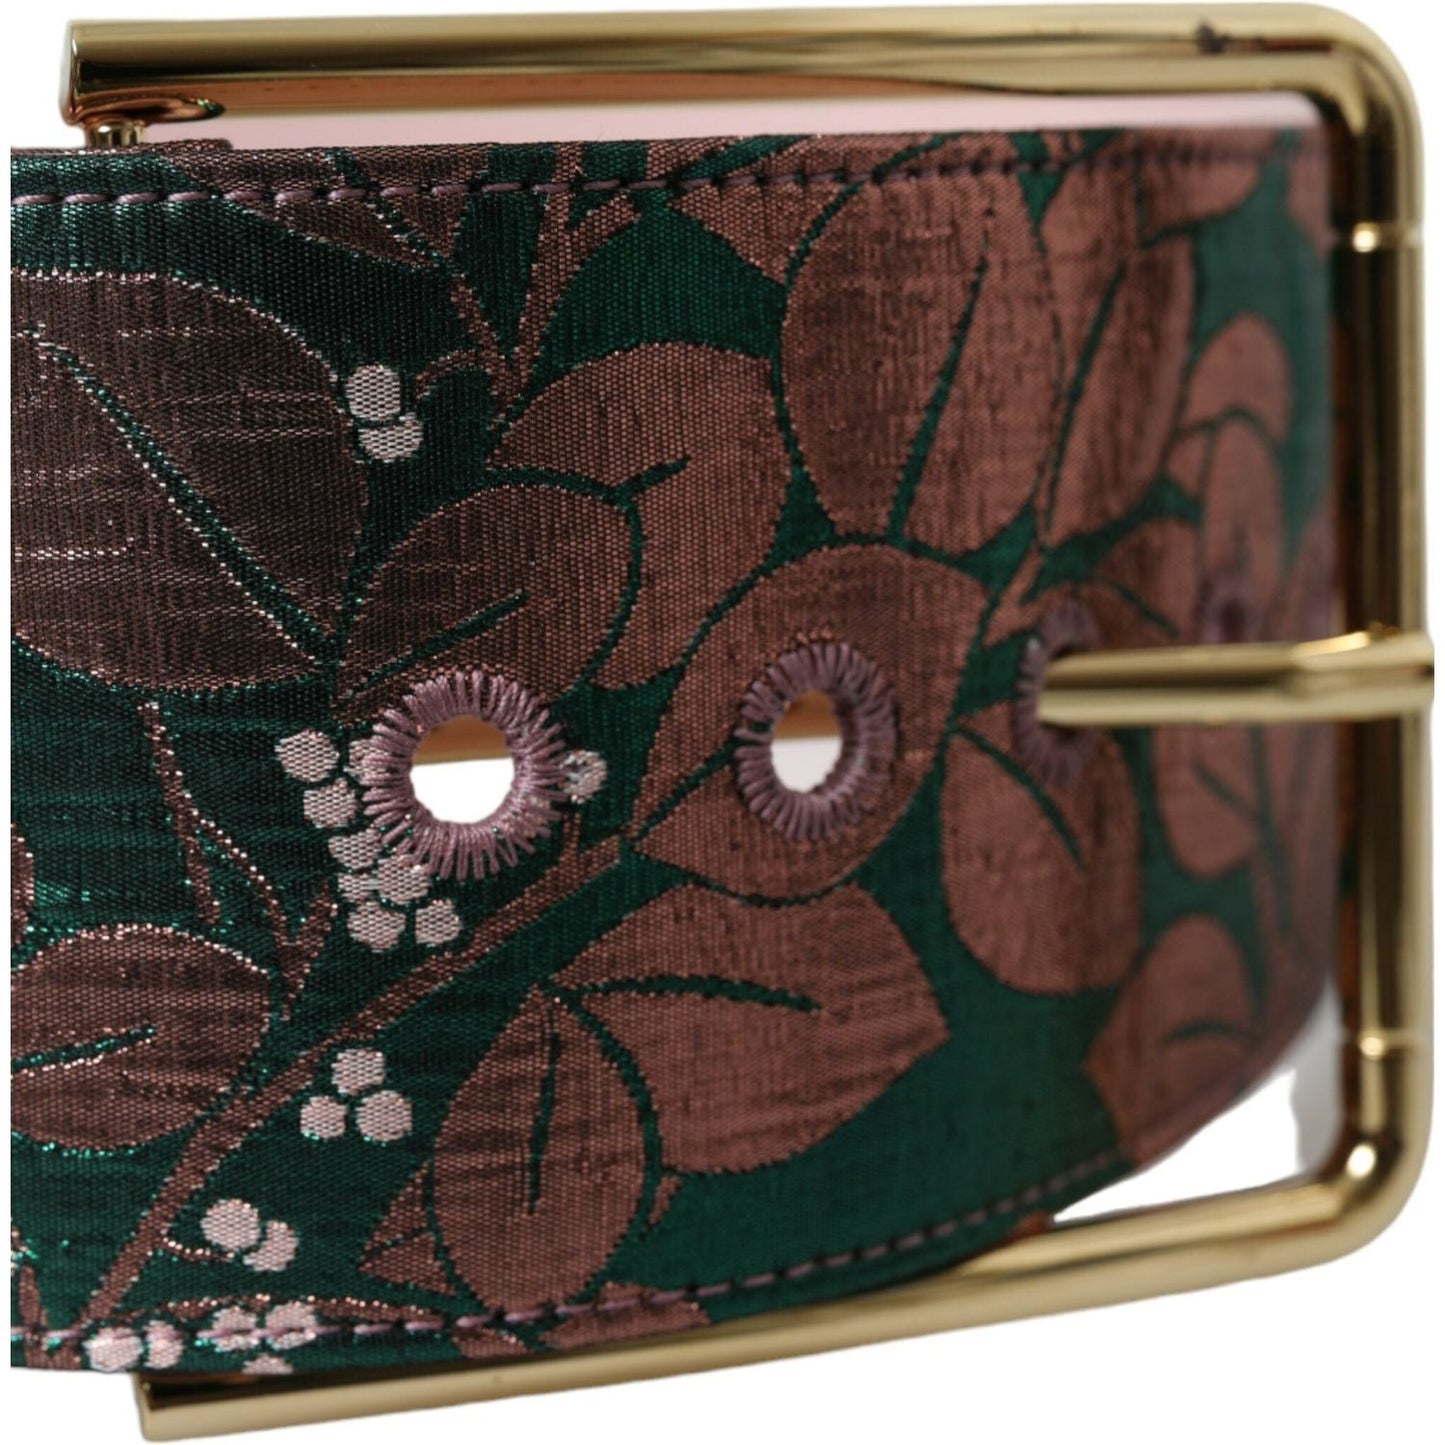 Dolce & Gabbana Multicolor High-Waist Statement Belt multicolor-high-waist-statement-belt